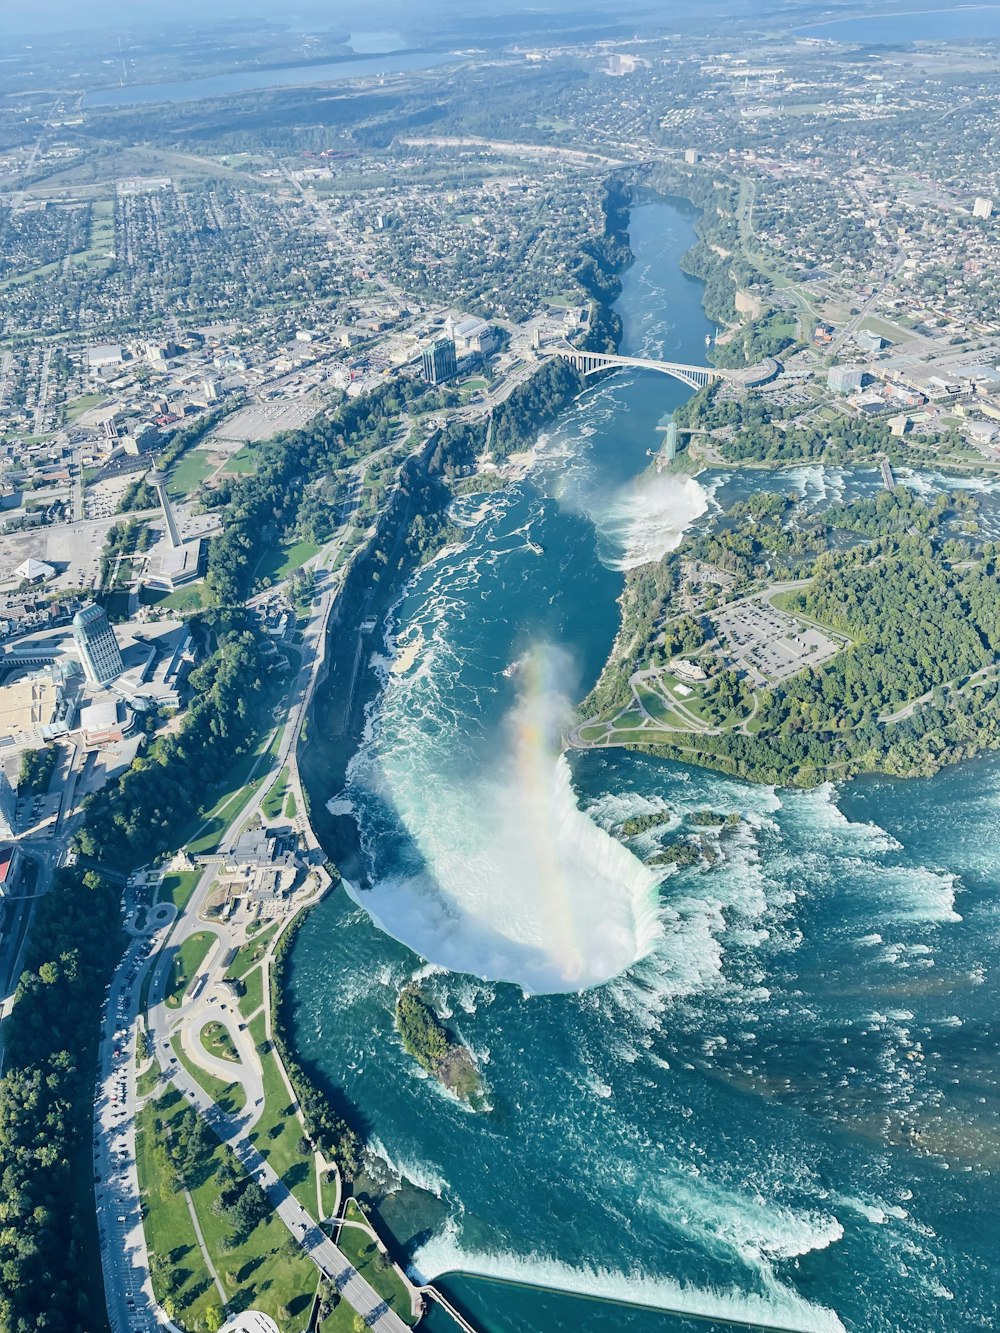 an aerial view of a river running through a city